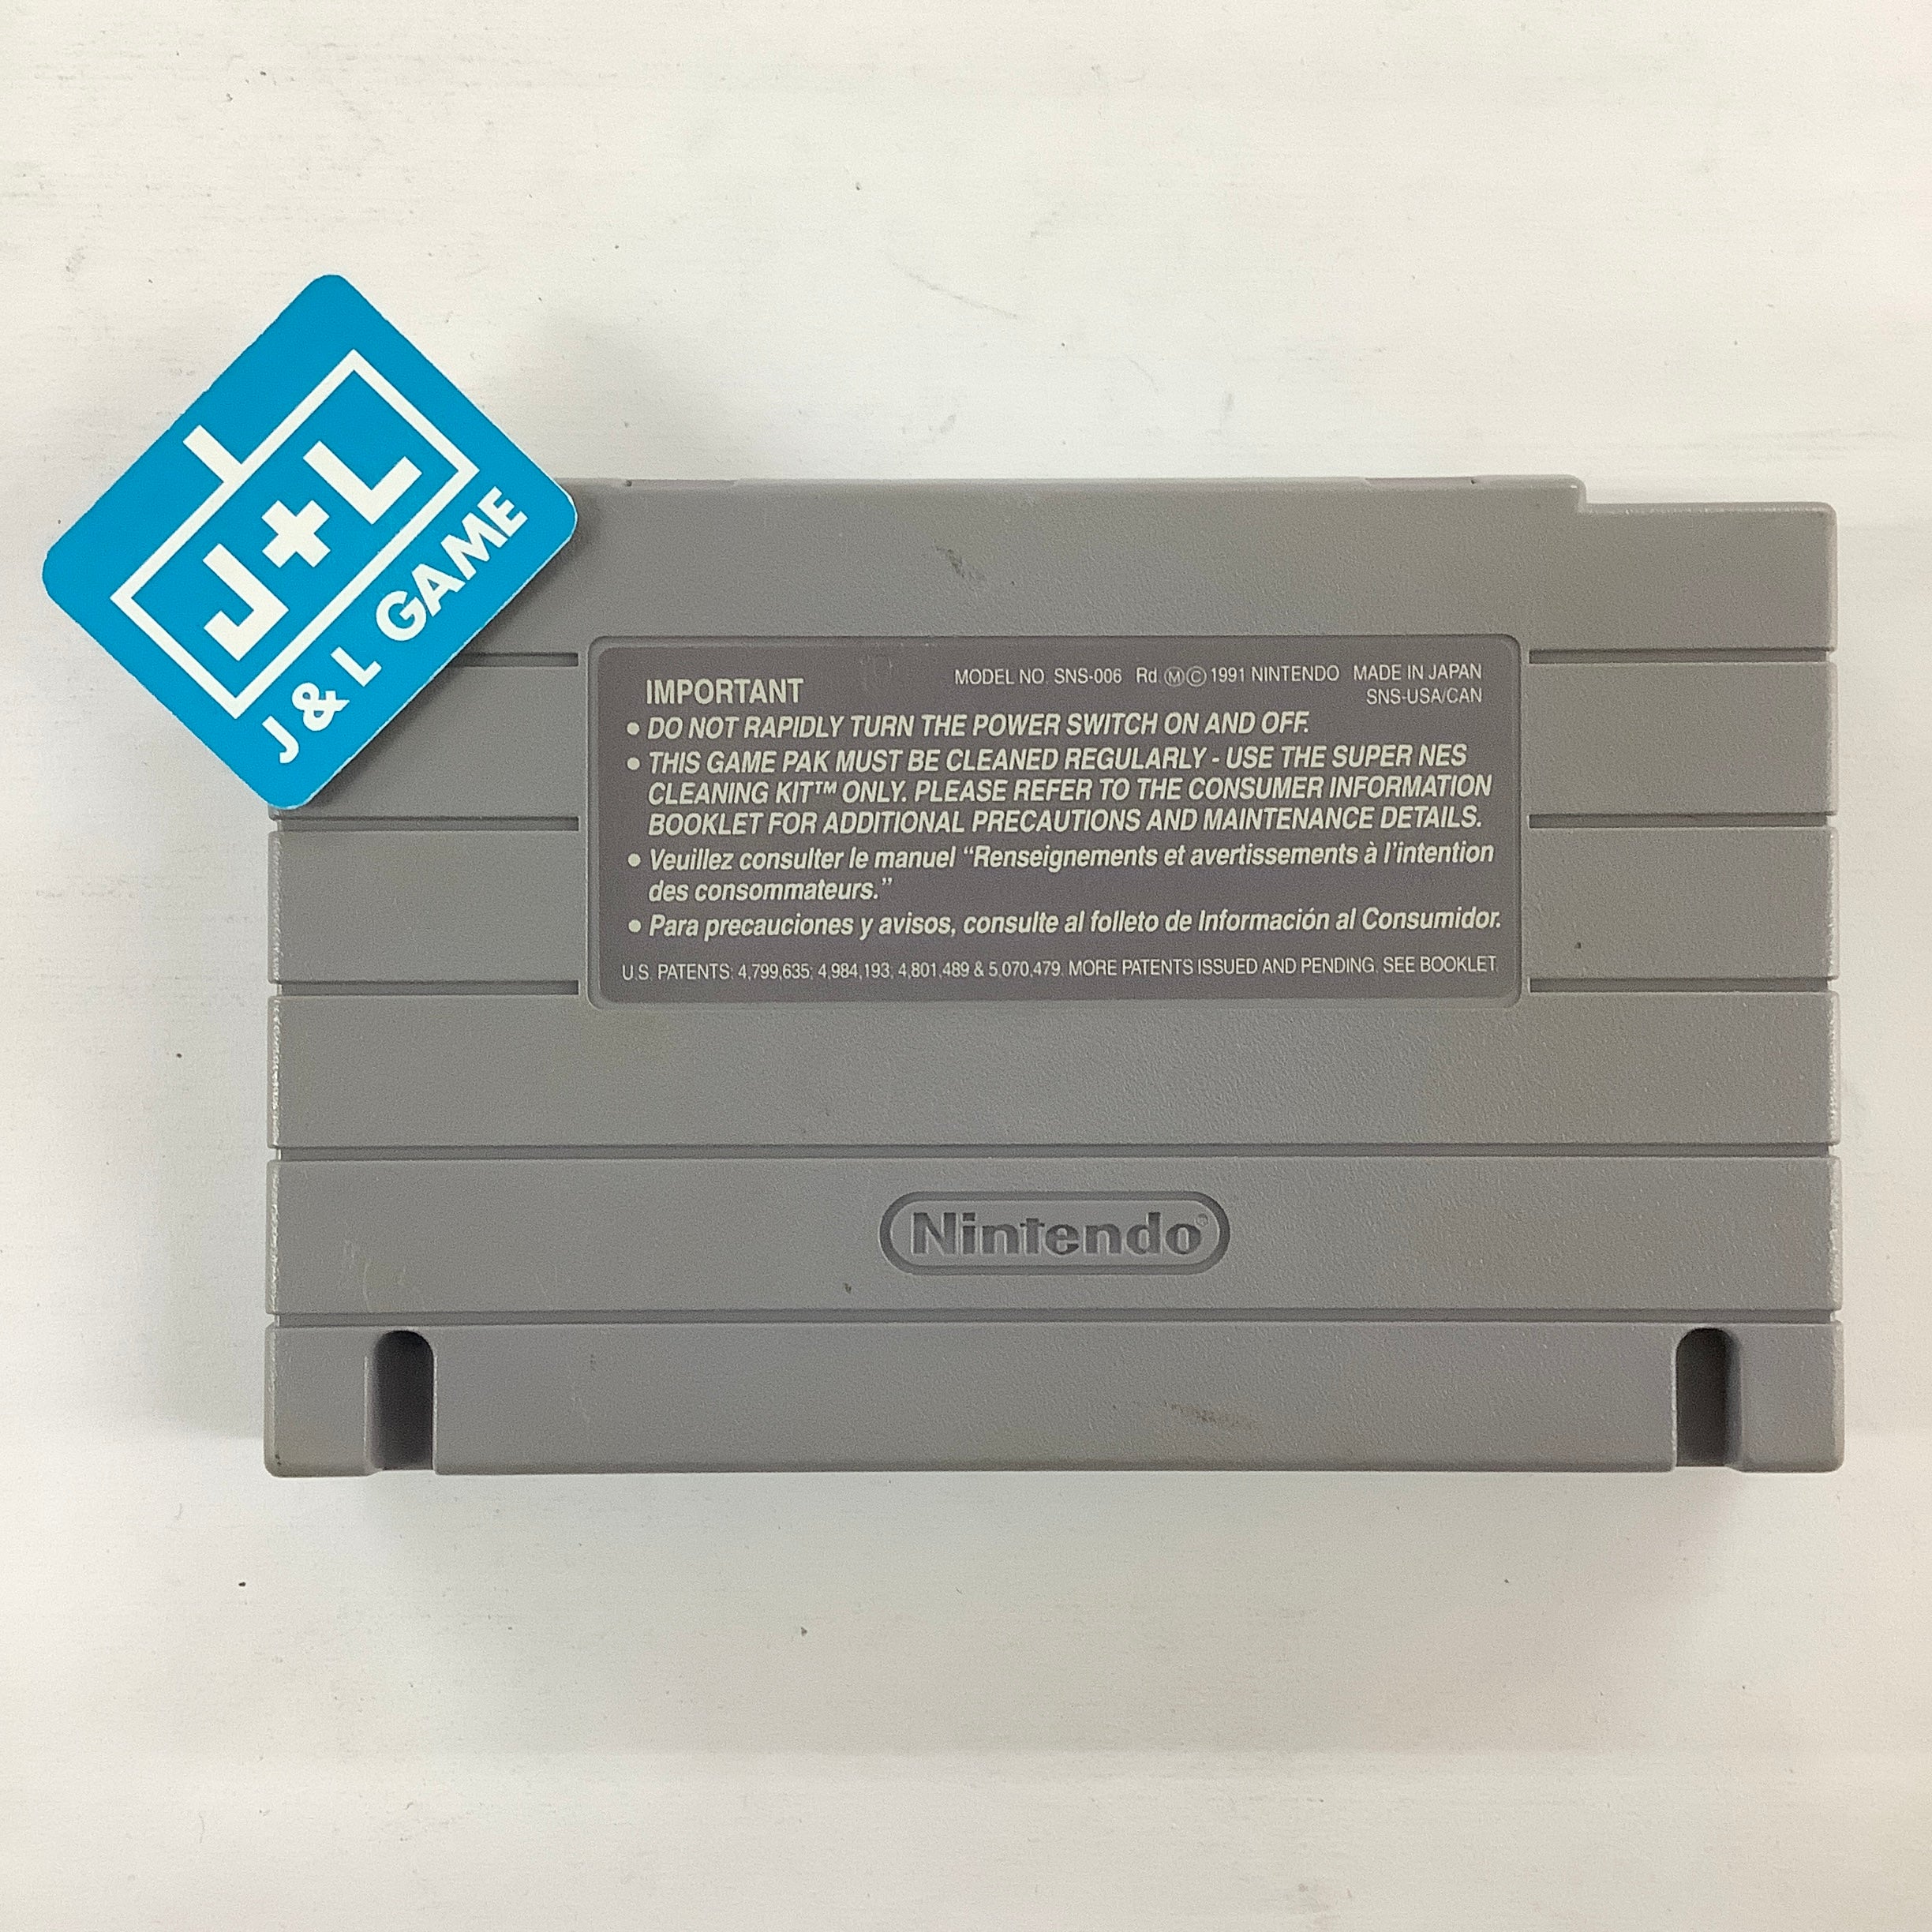 Super Valis IV - (SNES) Super Nintendo [Pre-Owned] Video Games Atlus   